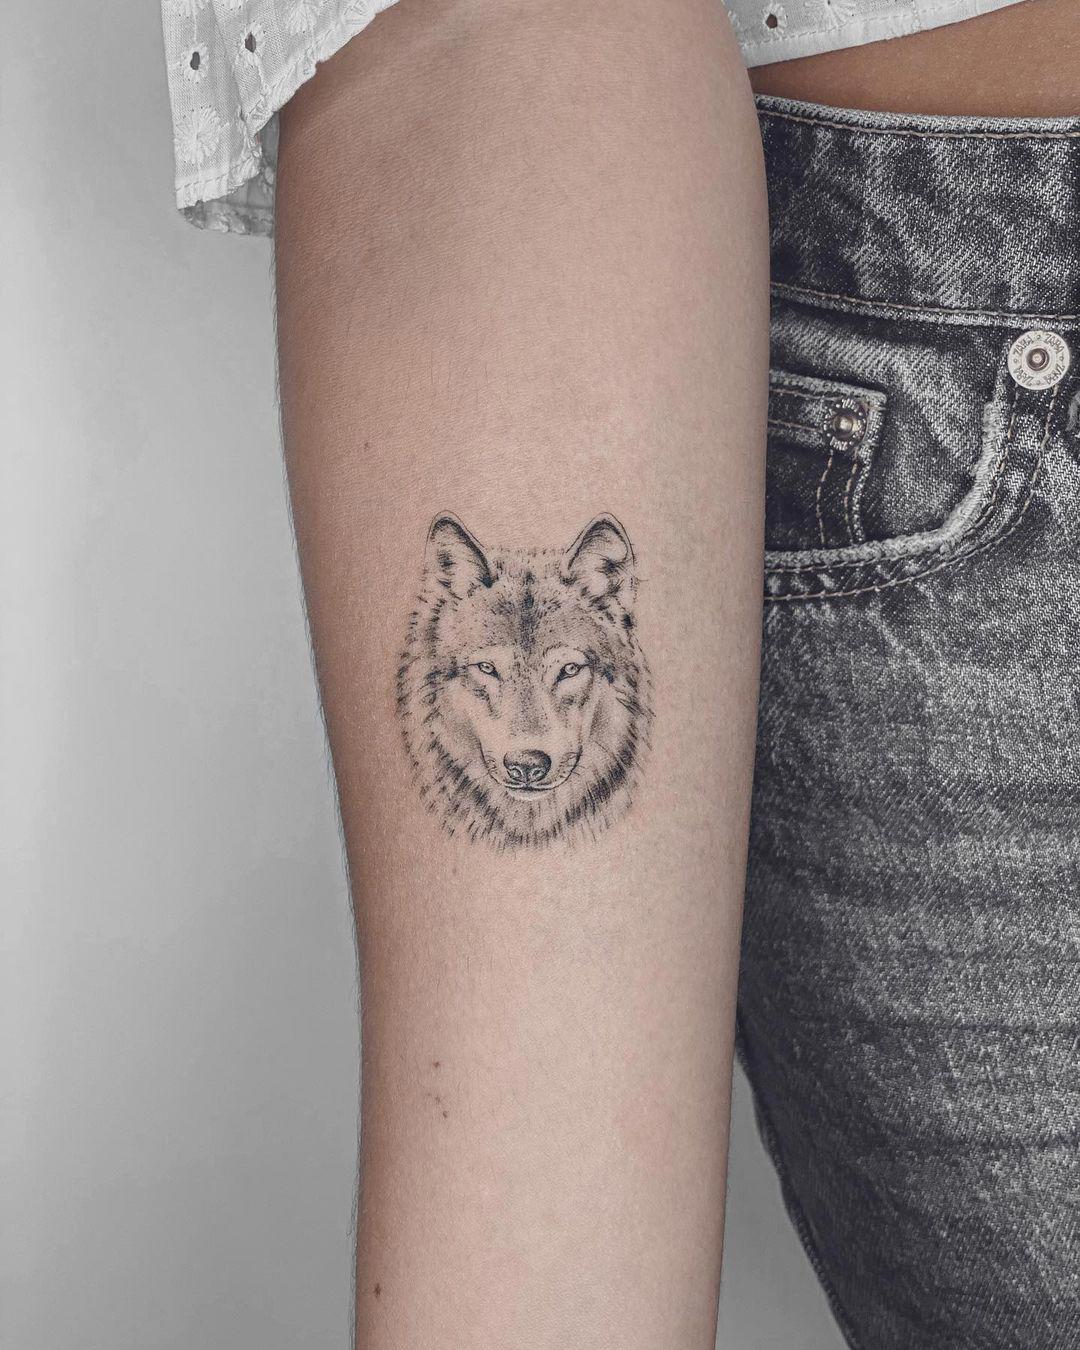 Tatuaje de lobo pequeño en el brazo